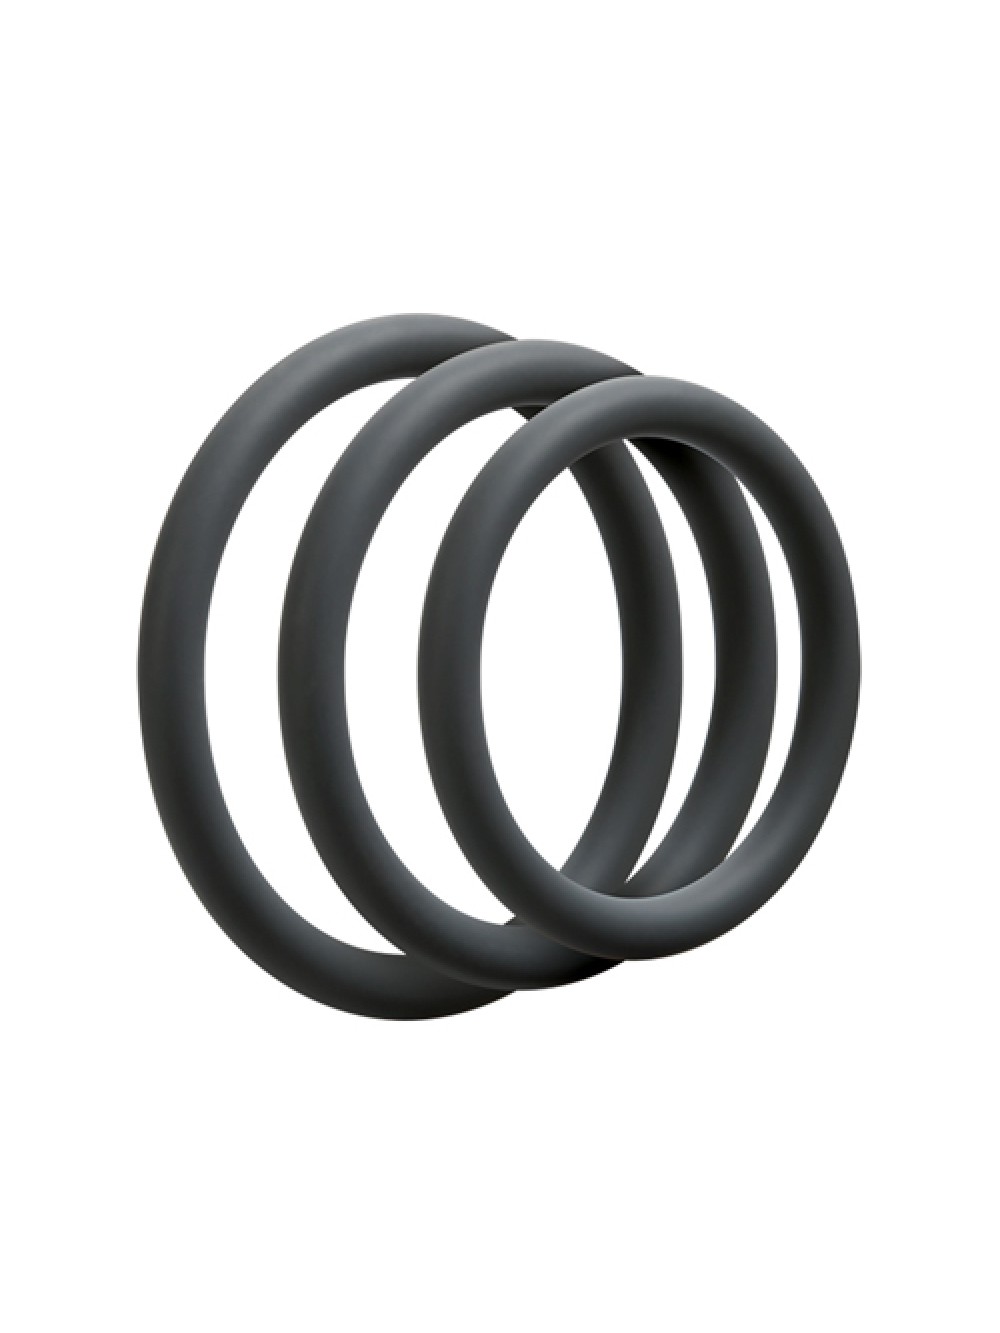 3 C-Ring Set - Thin - Slate 782421020477